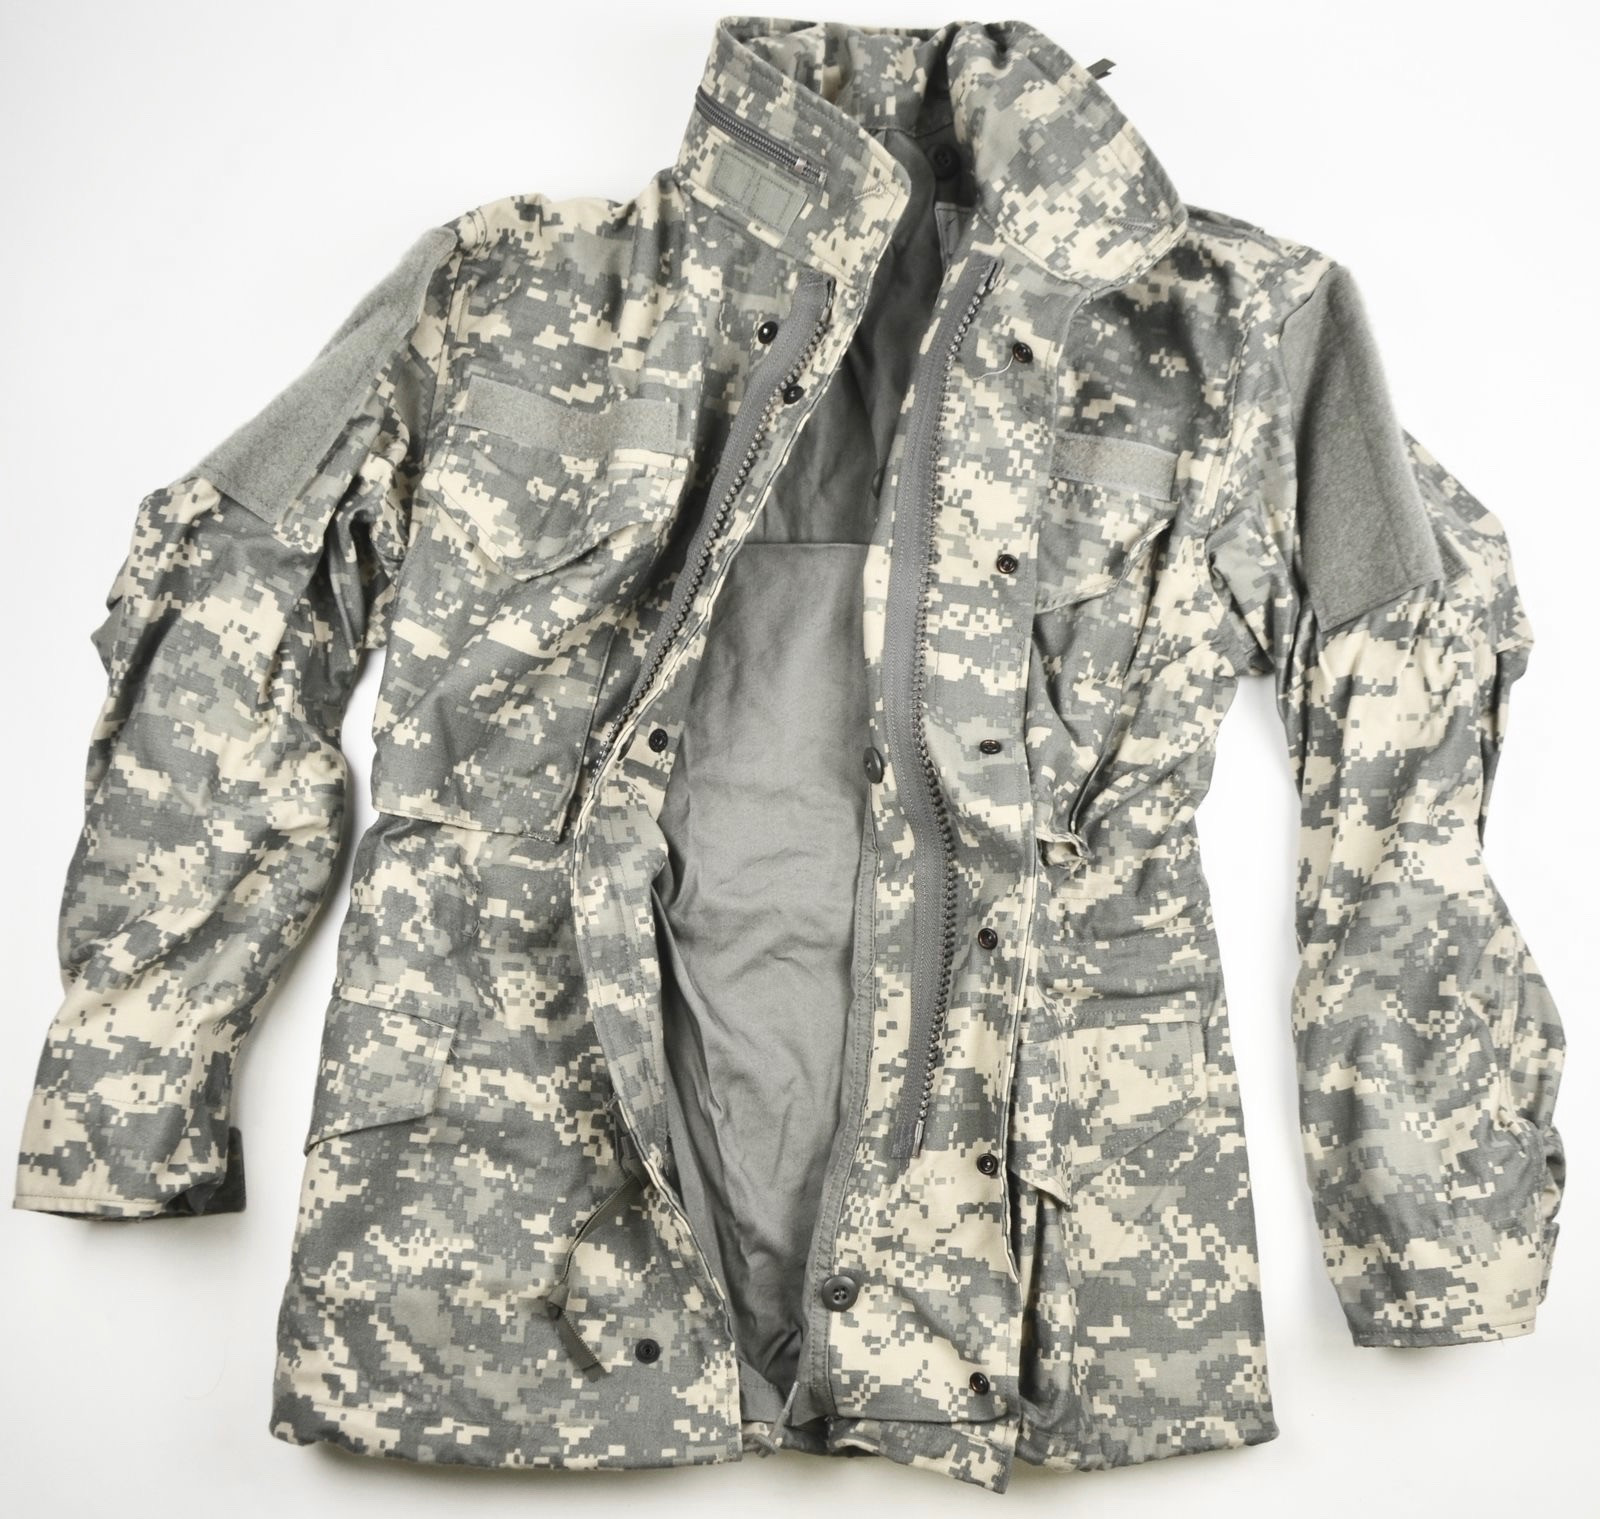 USGI Army ACU UCP Digital M65 Cold Weather Field Jacket Sizes Vary